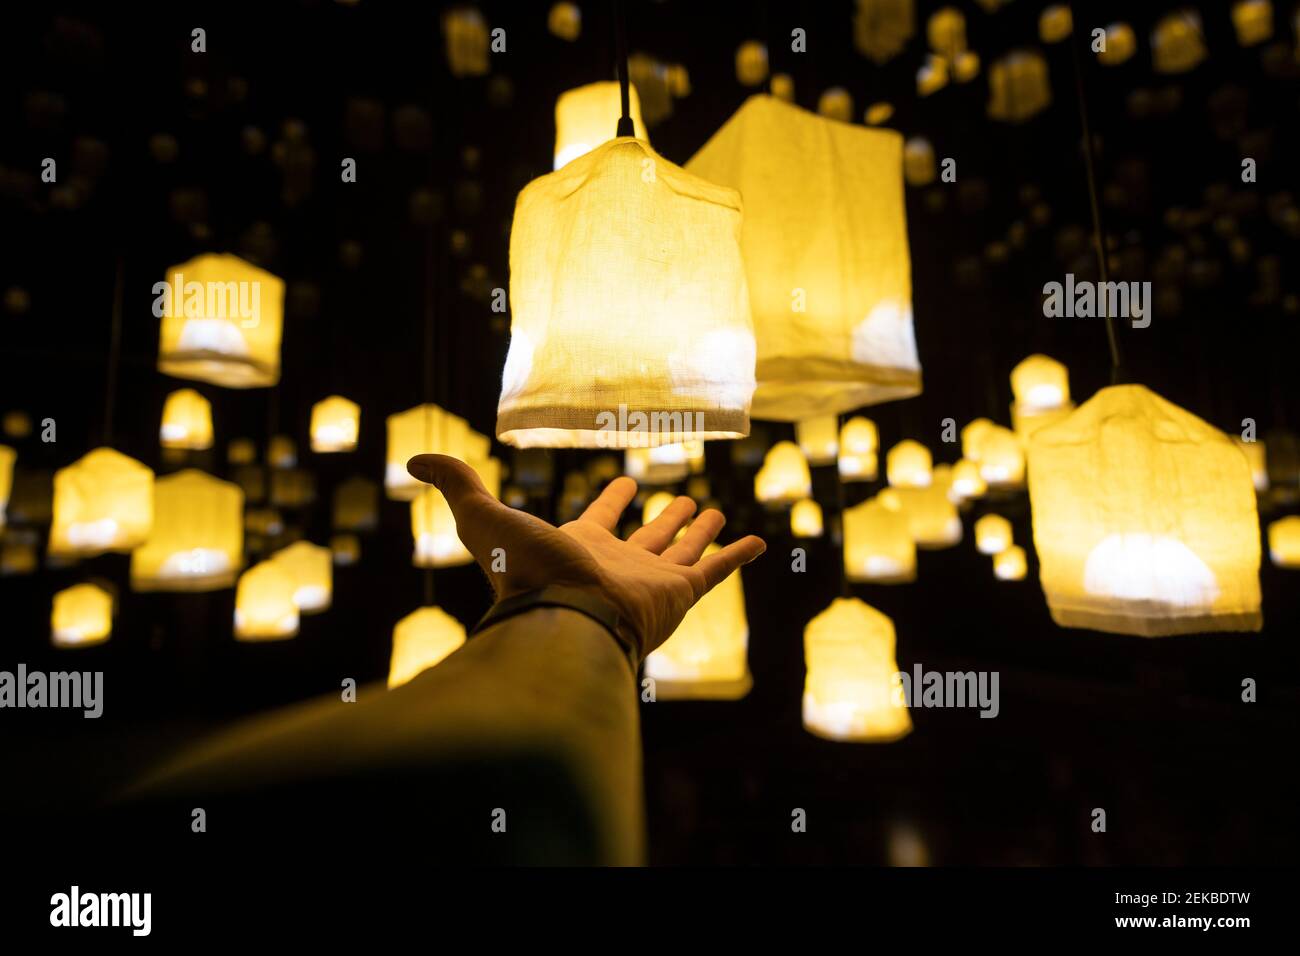 Man presenting illuminated design lamps hanging outdoors at night Stock Photo